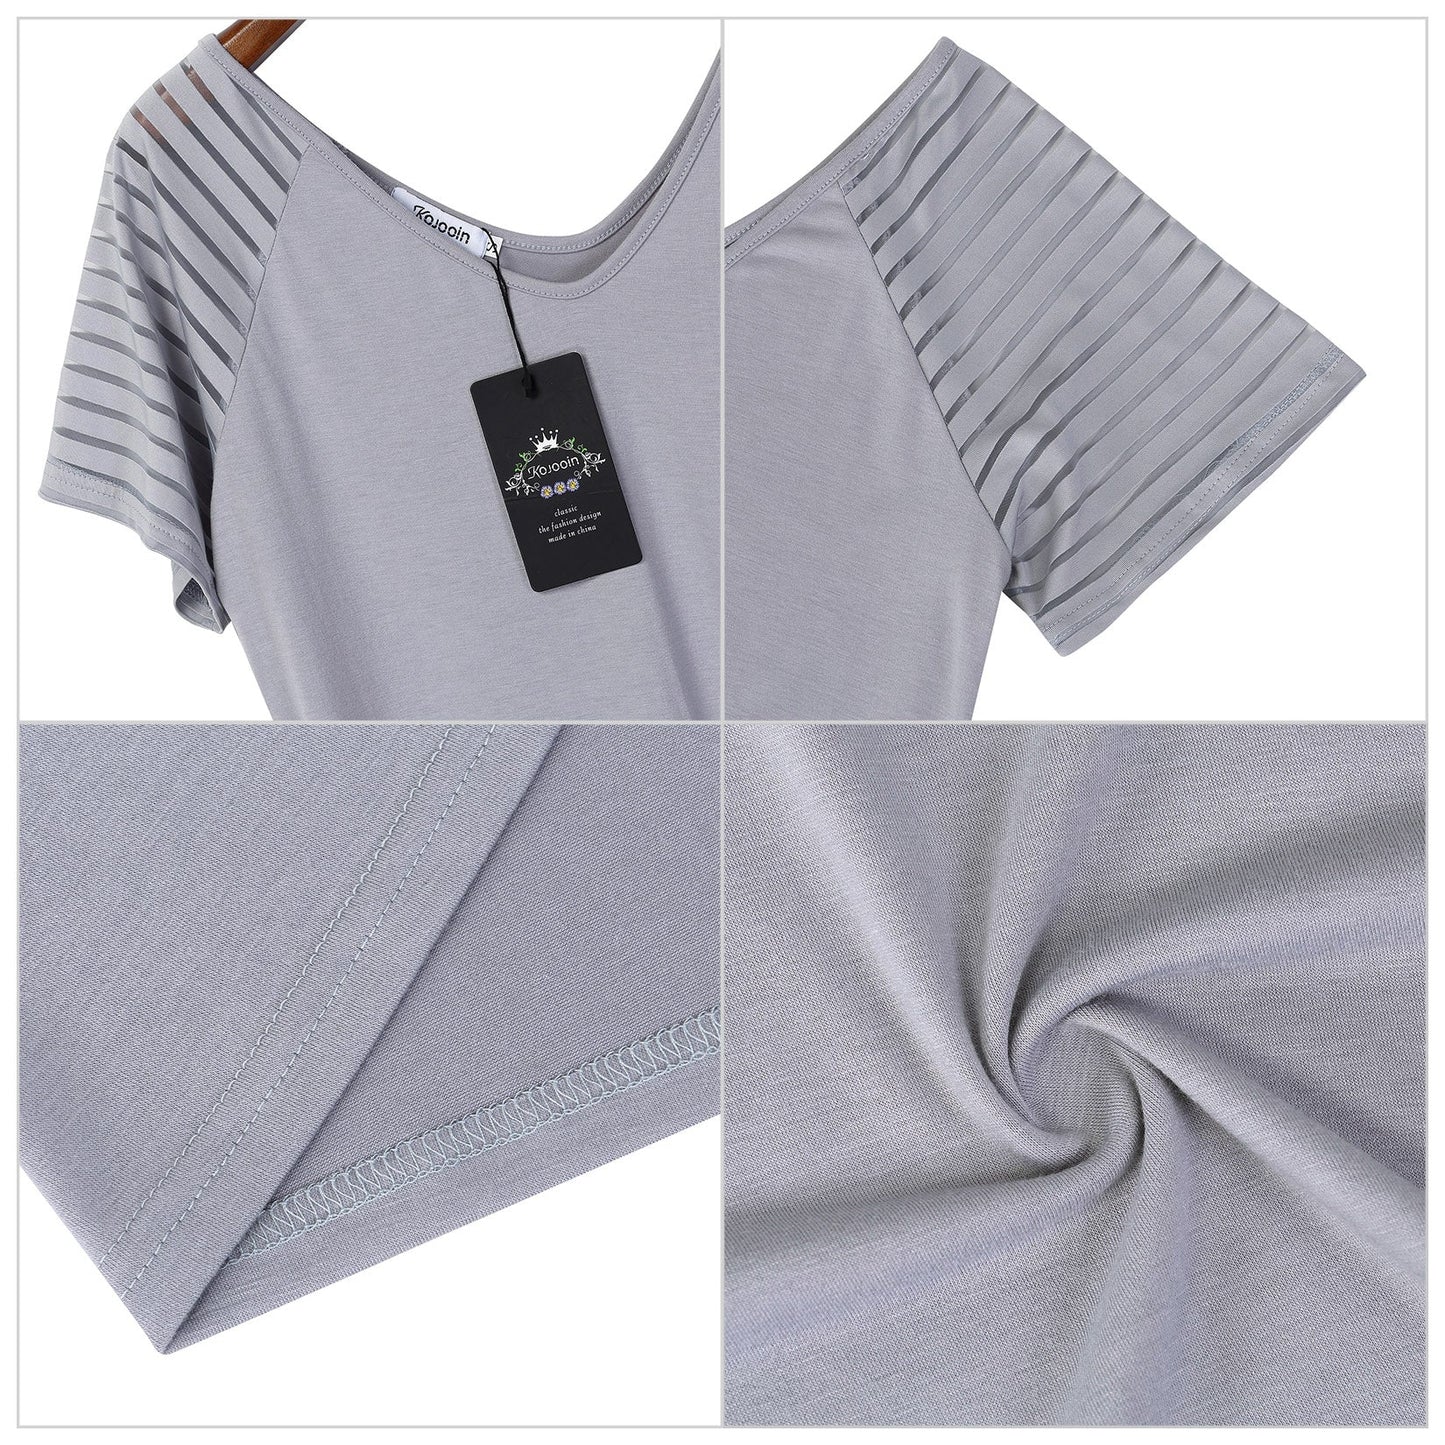 YESFASHION Sheer Sleeve Top Casual Panel V-Neck T-Shirt Grey